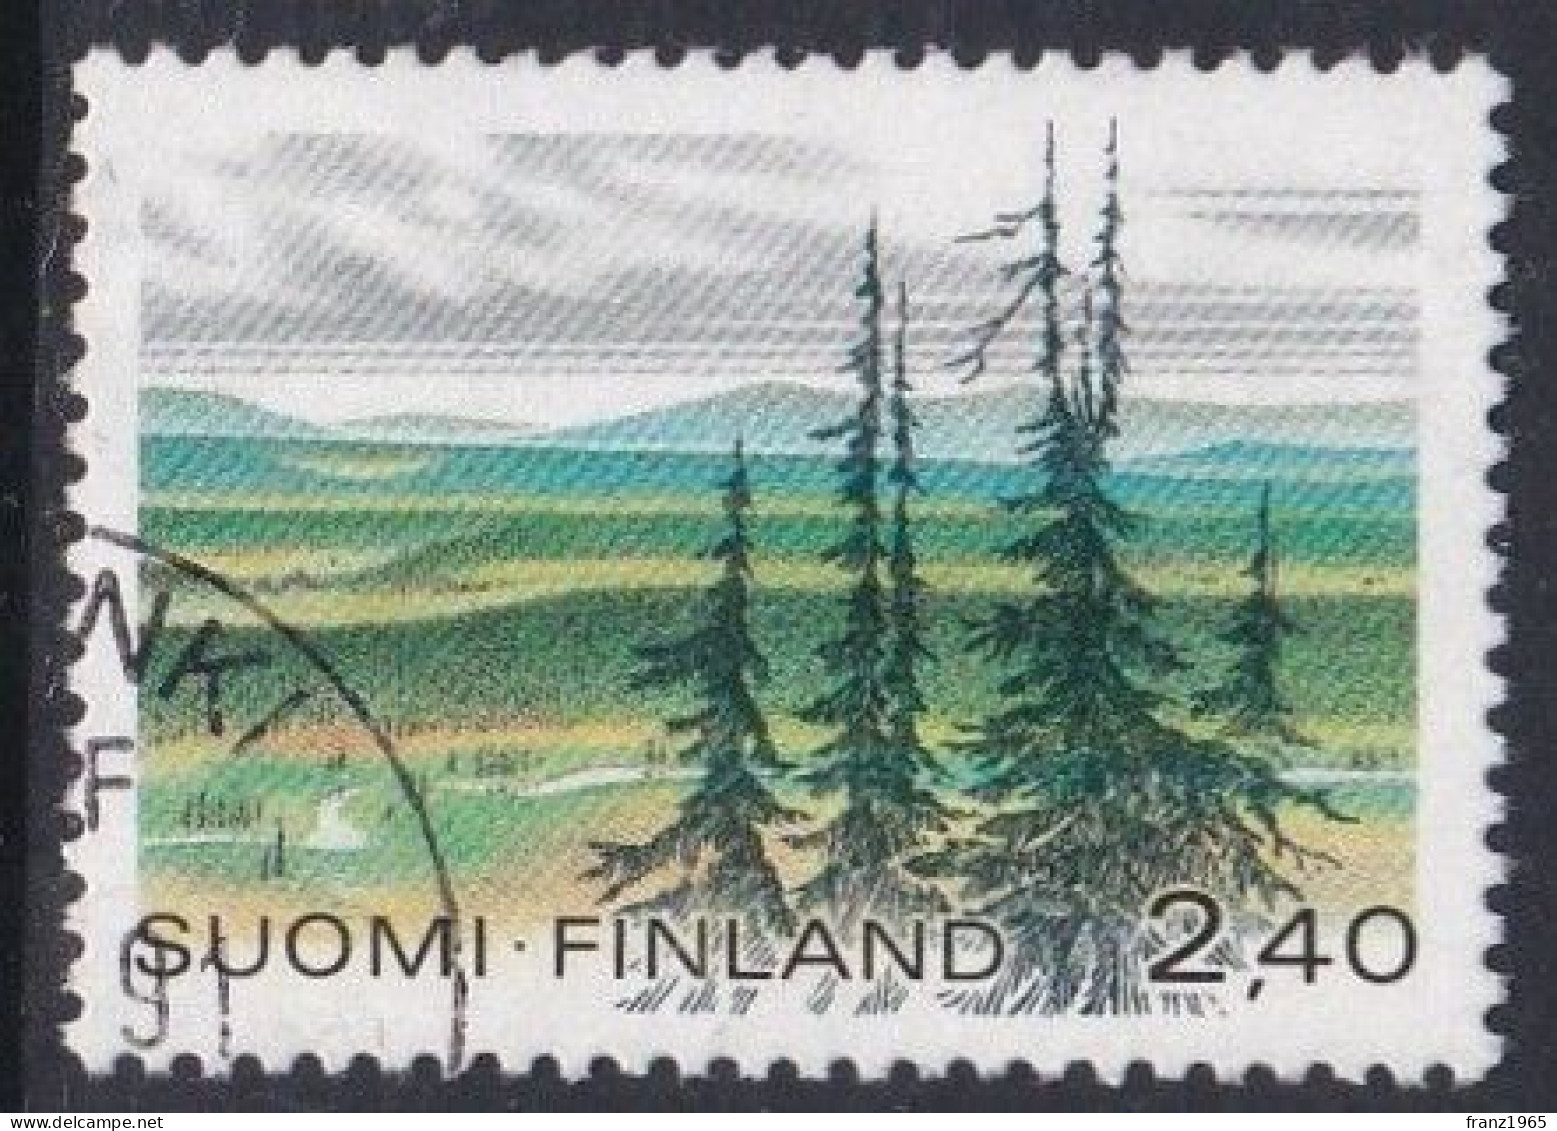 Urho-Kekkonen National Park With Saariselkä Mountains - Oblitérés